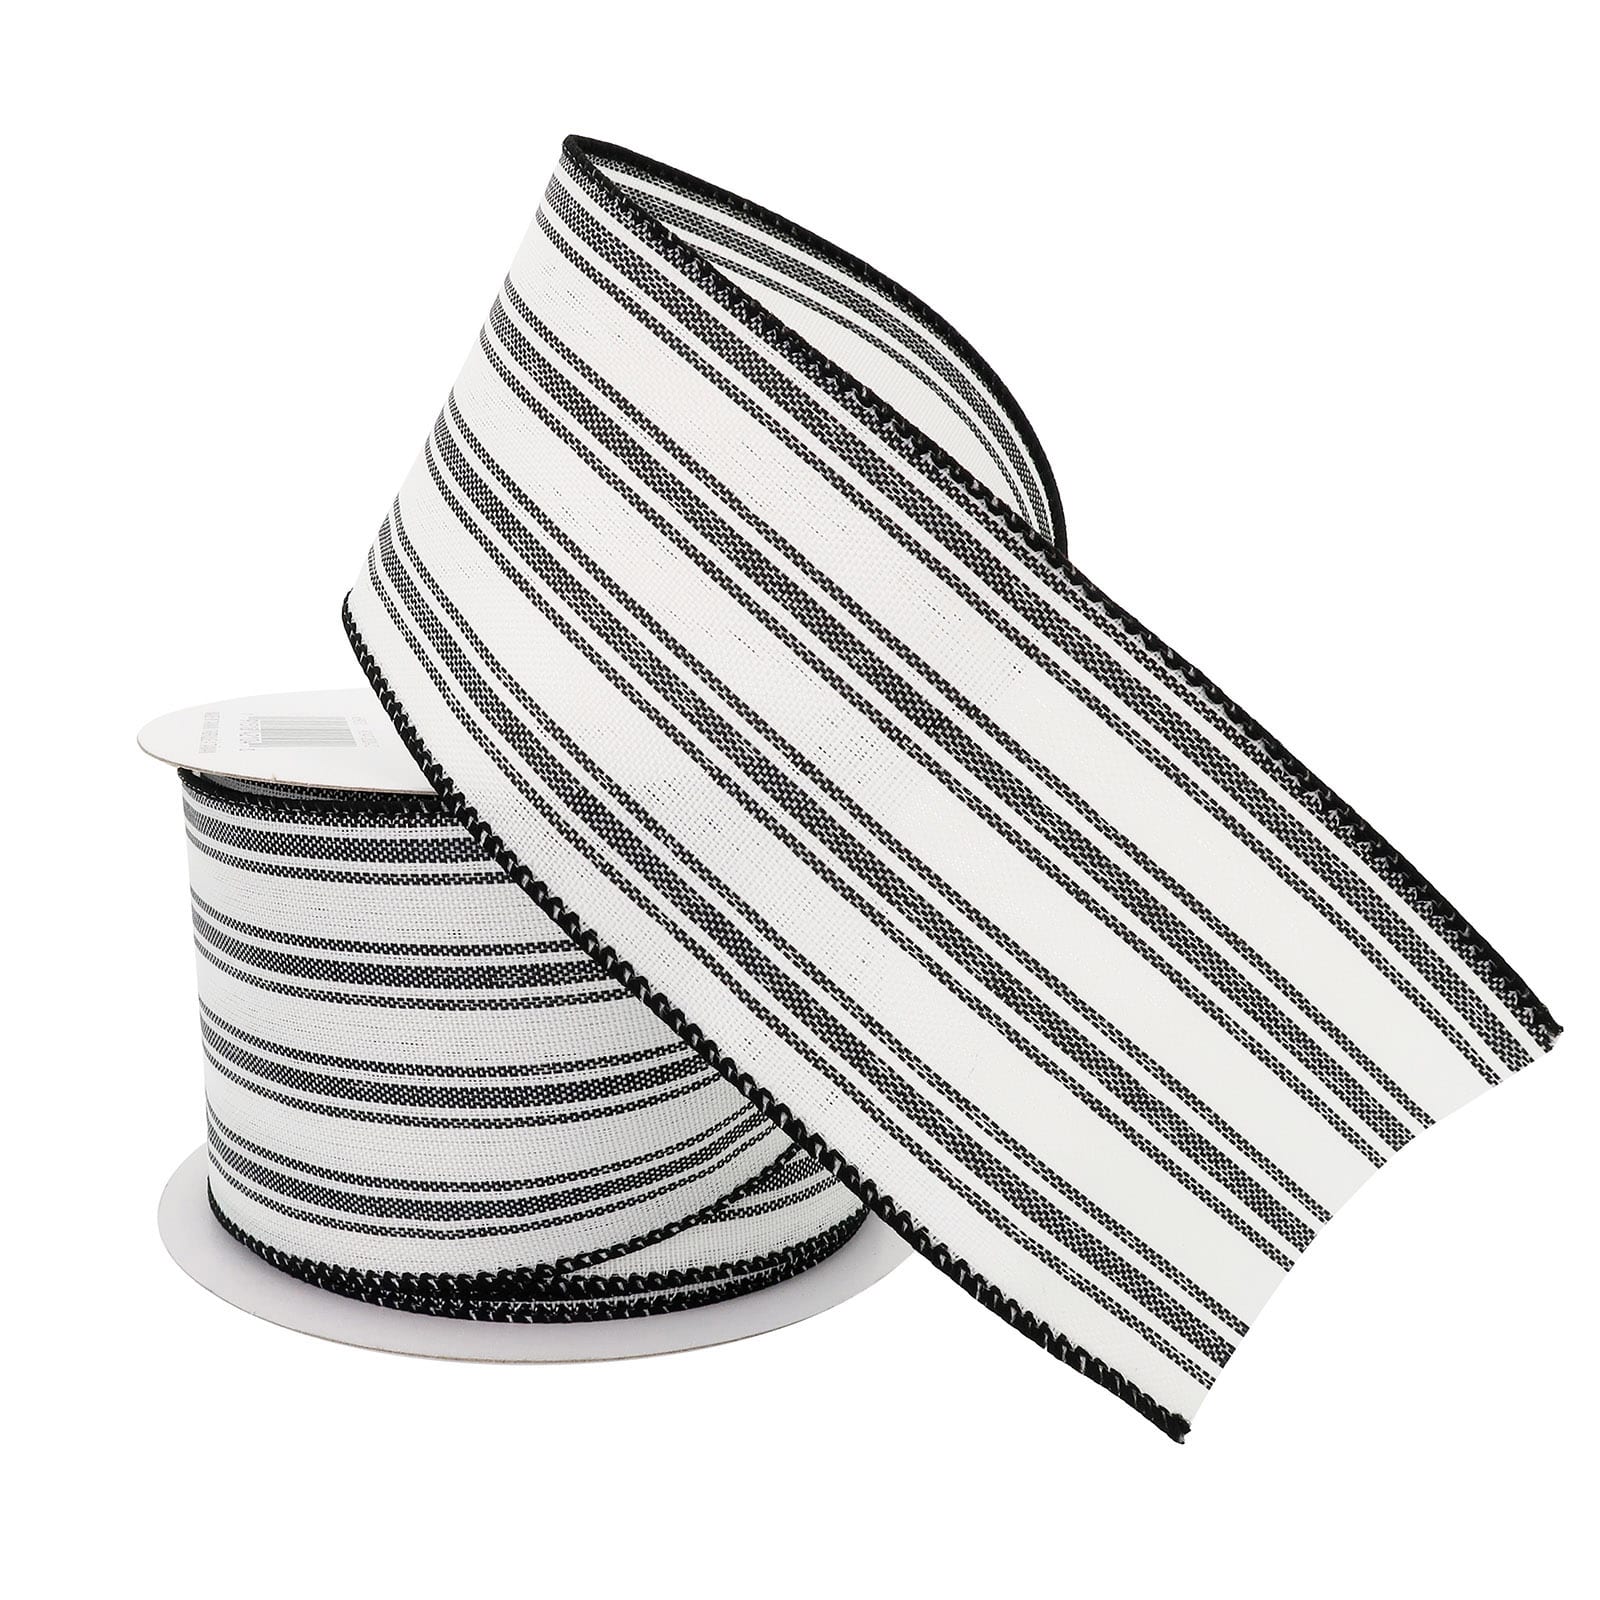 2.5&#x22; Faux Linen Wired Stripe Ribbon by Celebrate It&#x2122;